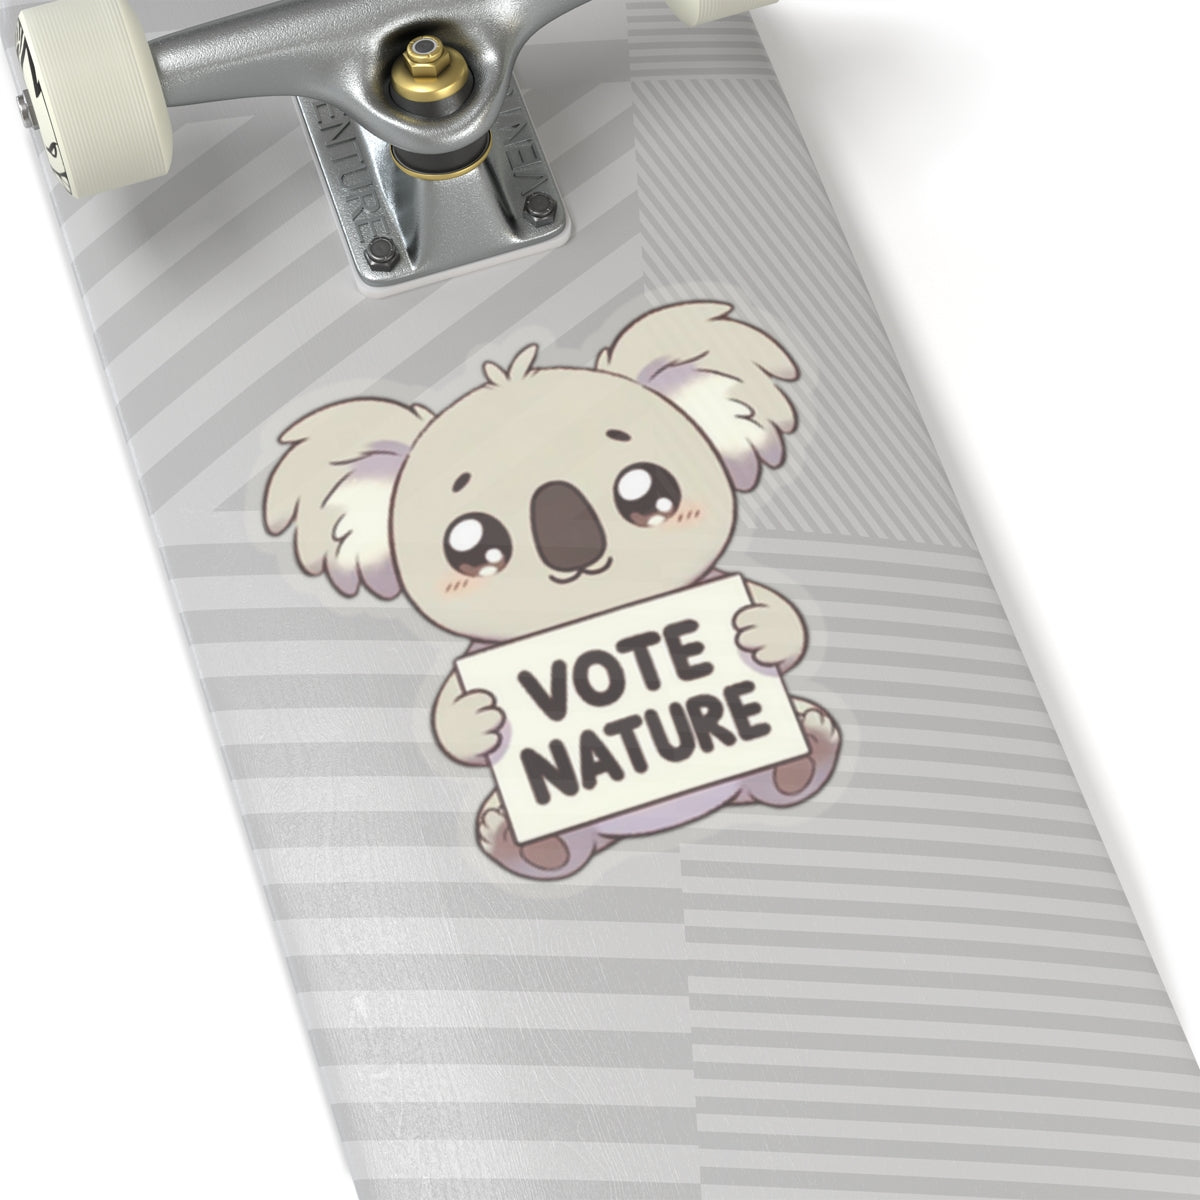 Inspirational Cute Kawala Statement vinyl Sticker: Vote Nature! for laptop, kindle, phone, ipad, instrument case, notebook, mood board